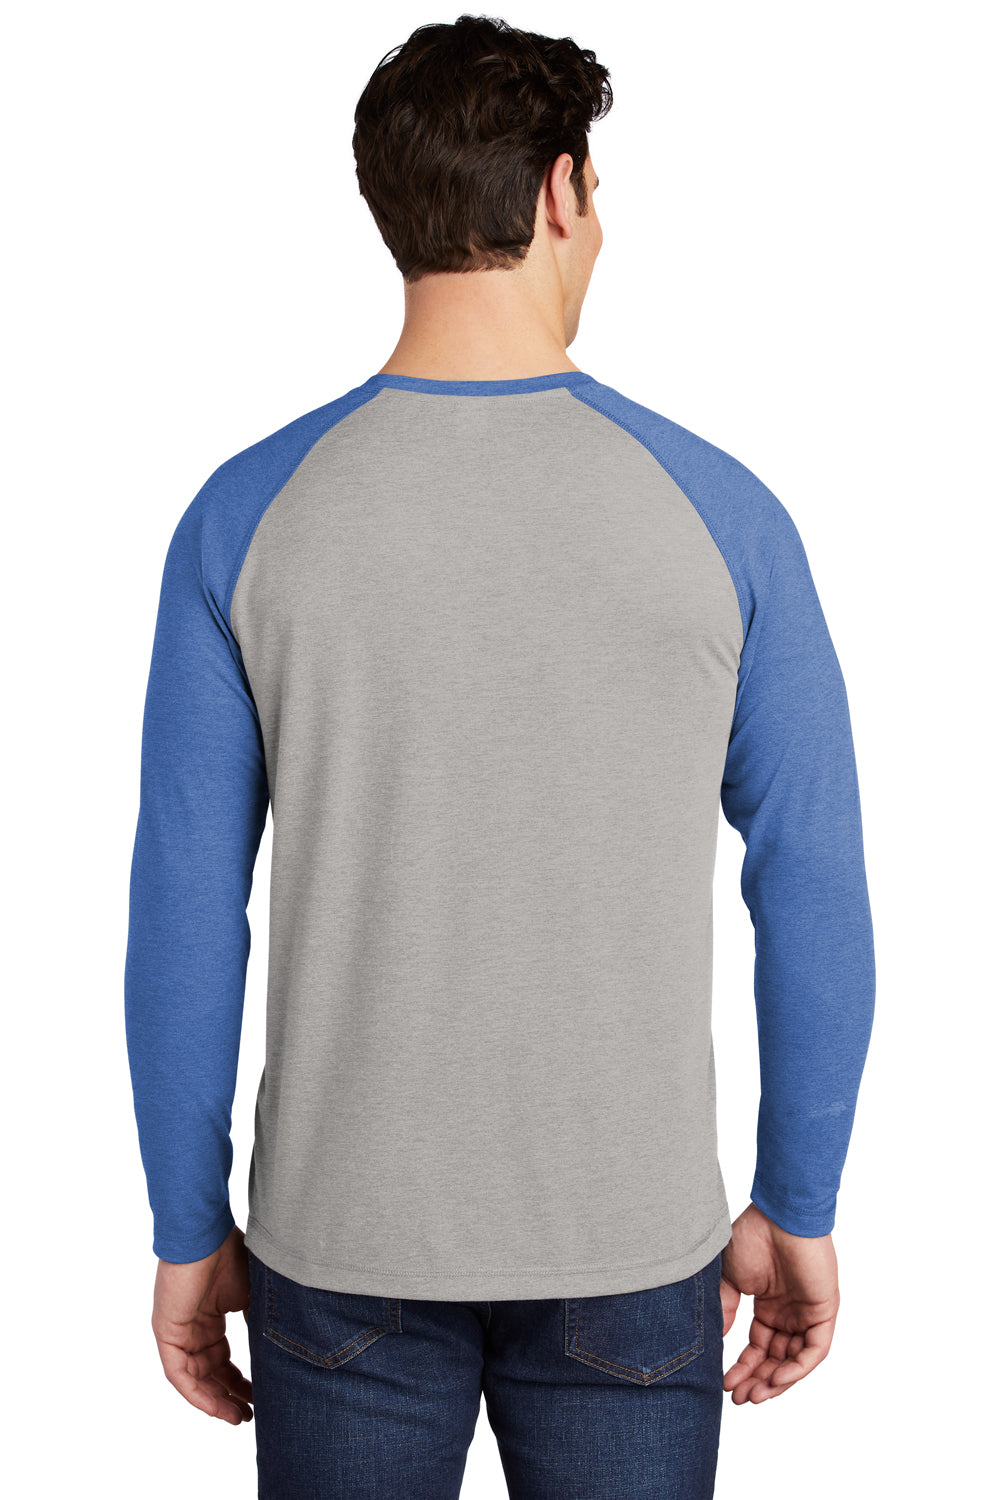 Sport-Tek Mens Moisture Wicking Long Sleeve Crewneck T-Shirt Heather True Royal Blue/Heather Light Grey Side